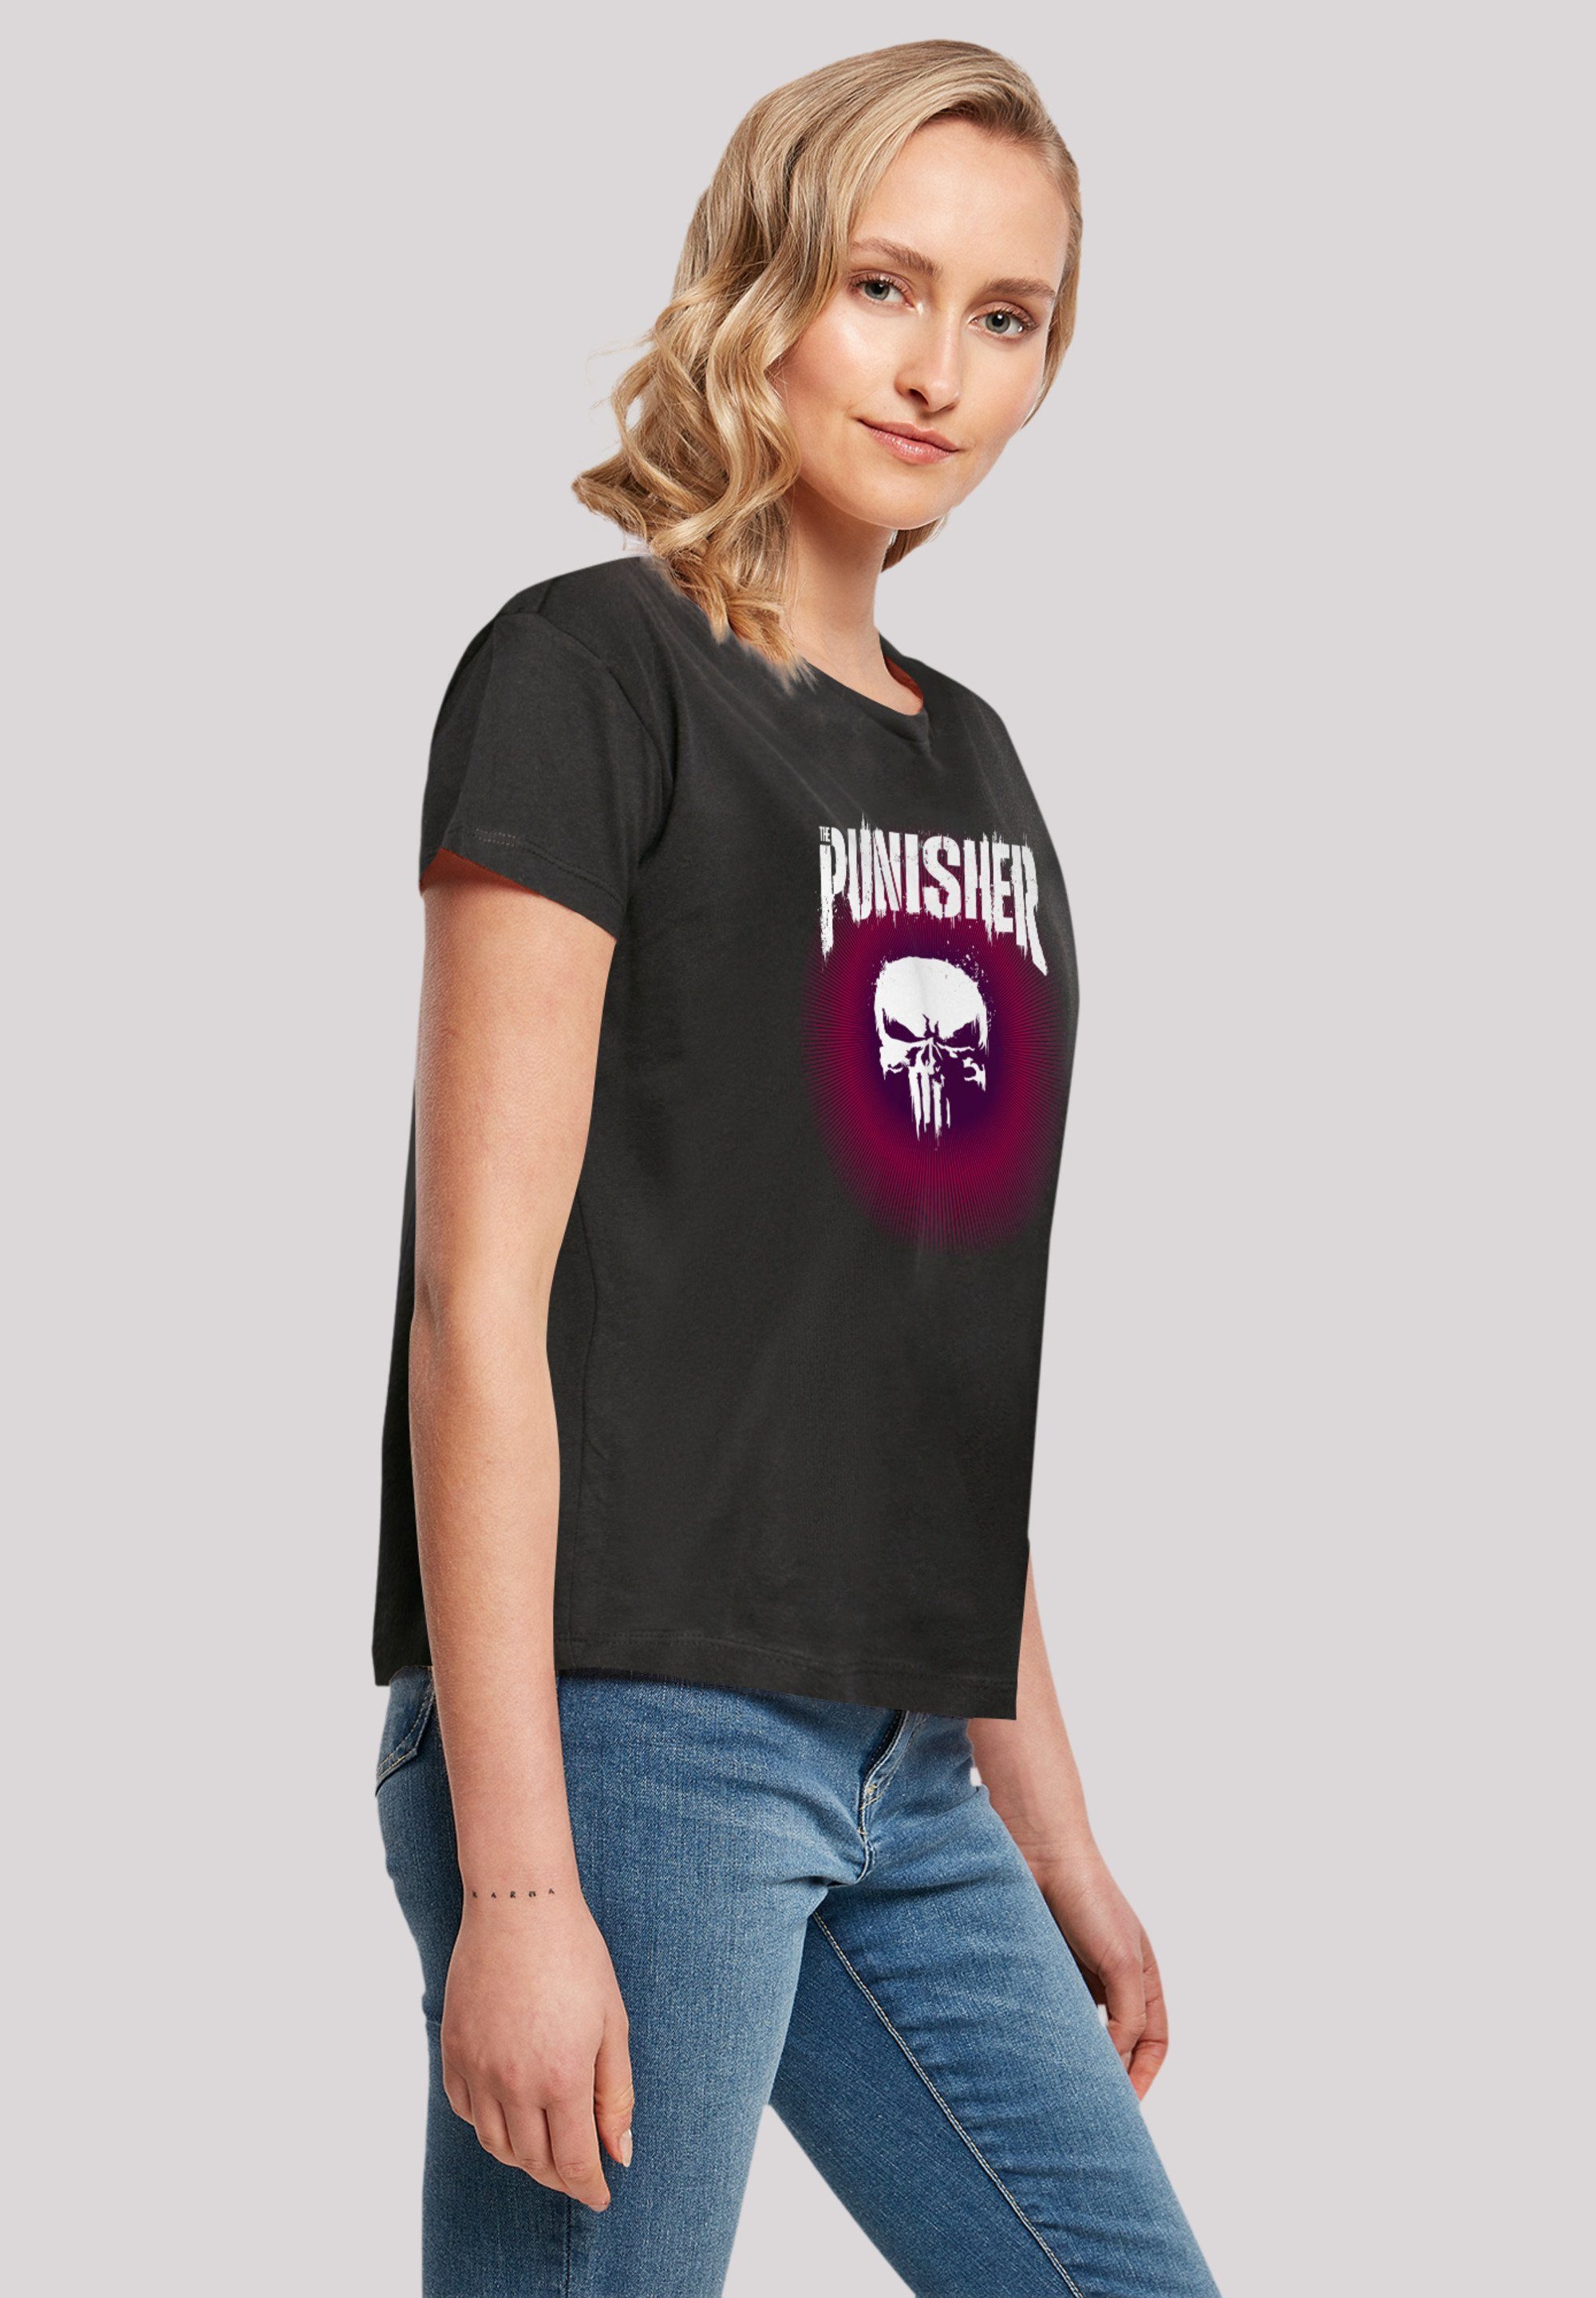 F4NT4STIC T-Shirt Marvel Premium Warface Qualität Psychedelic Punisher